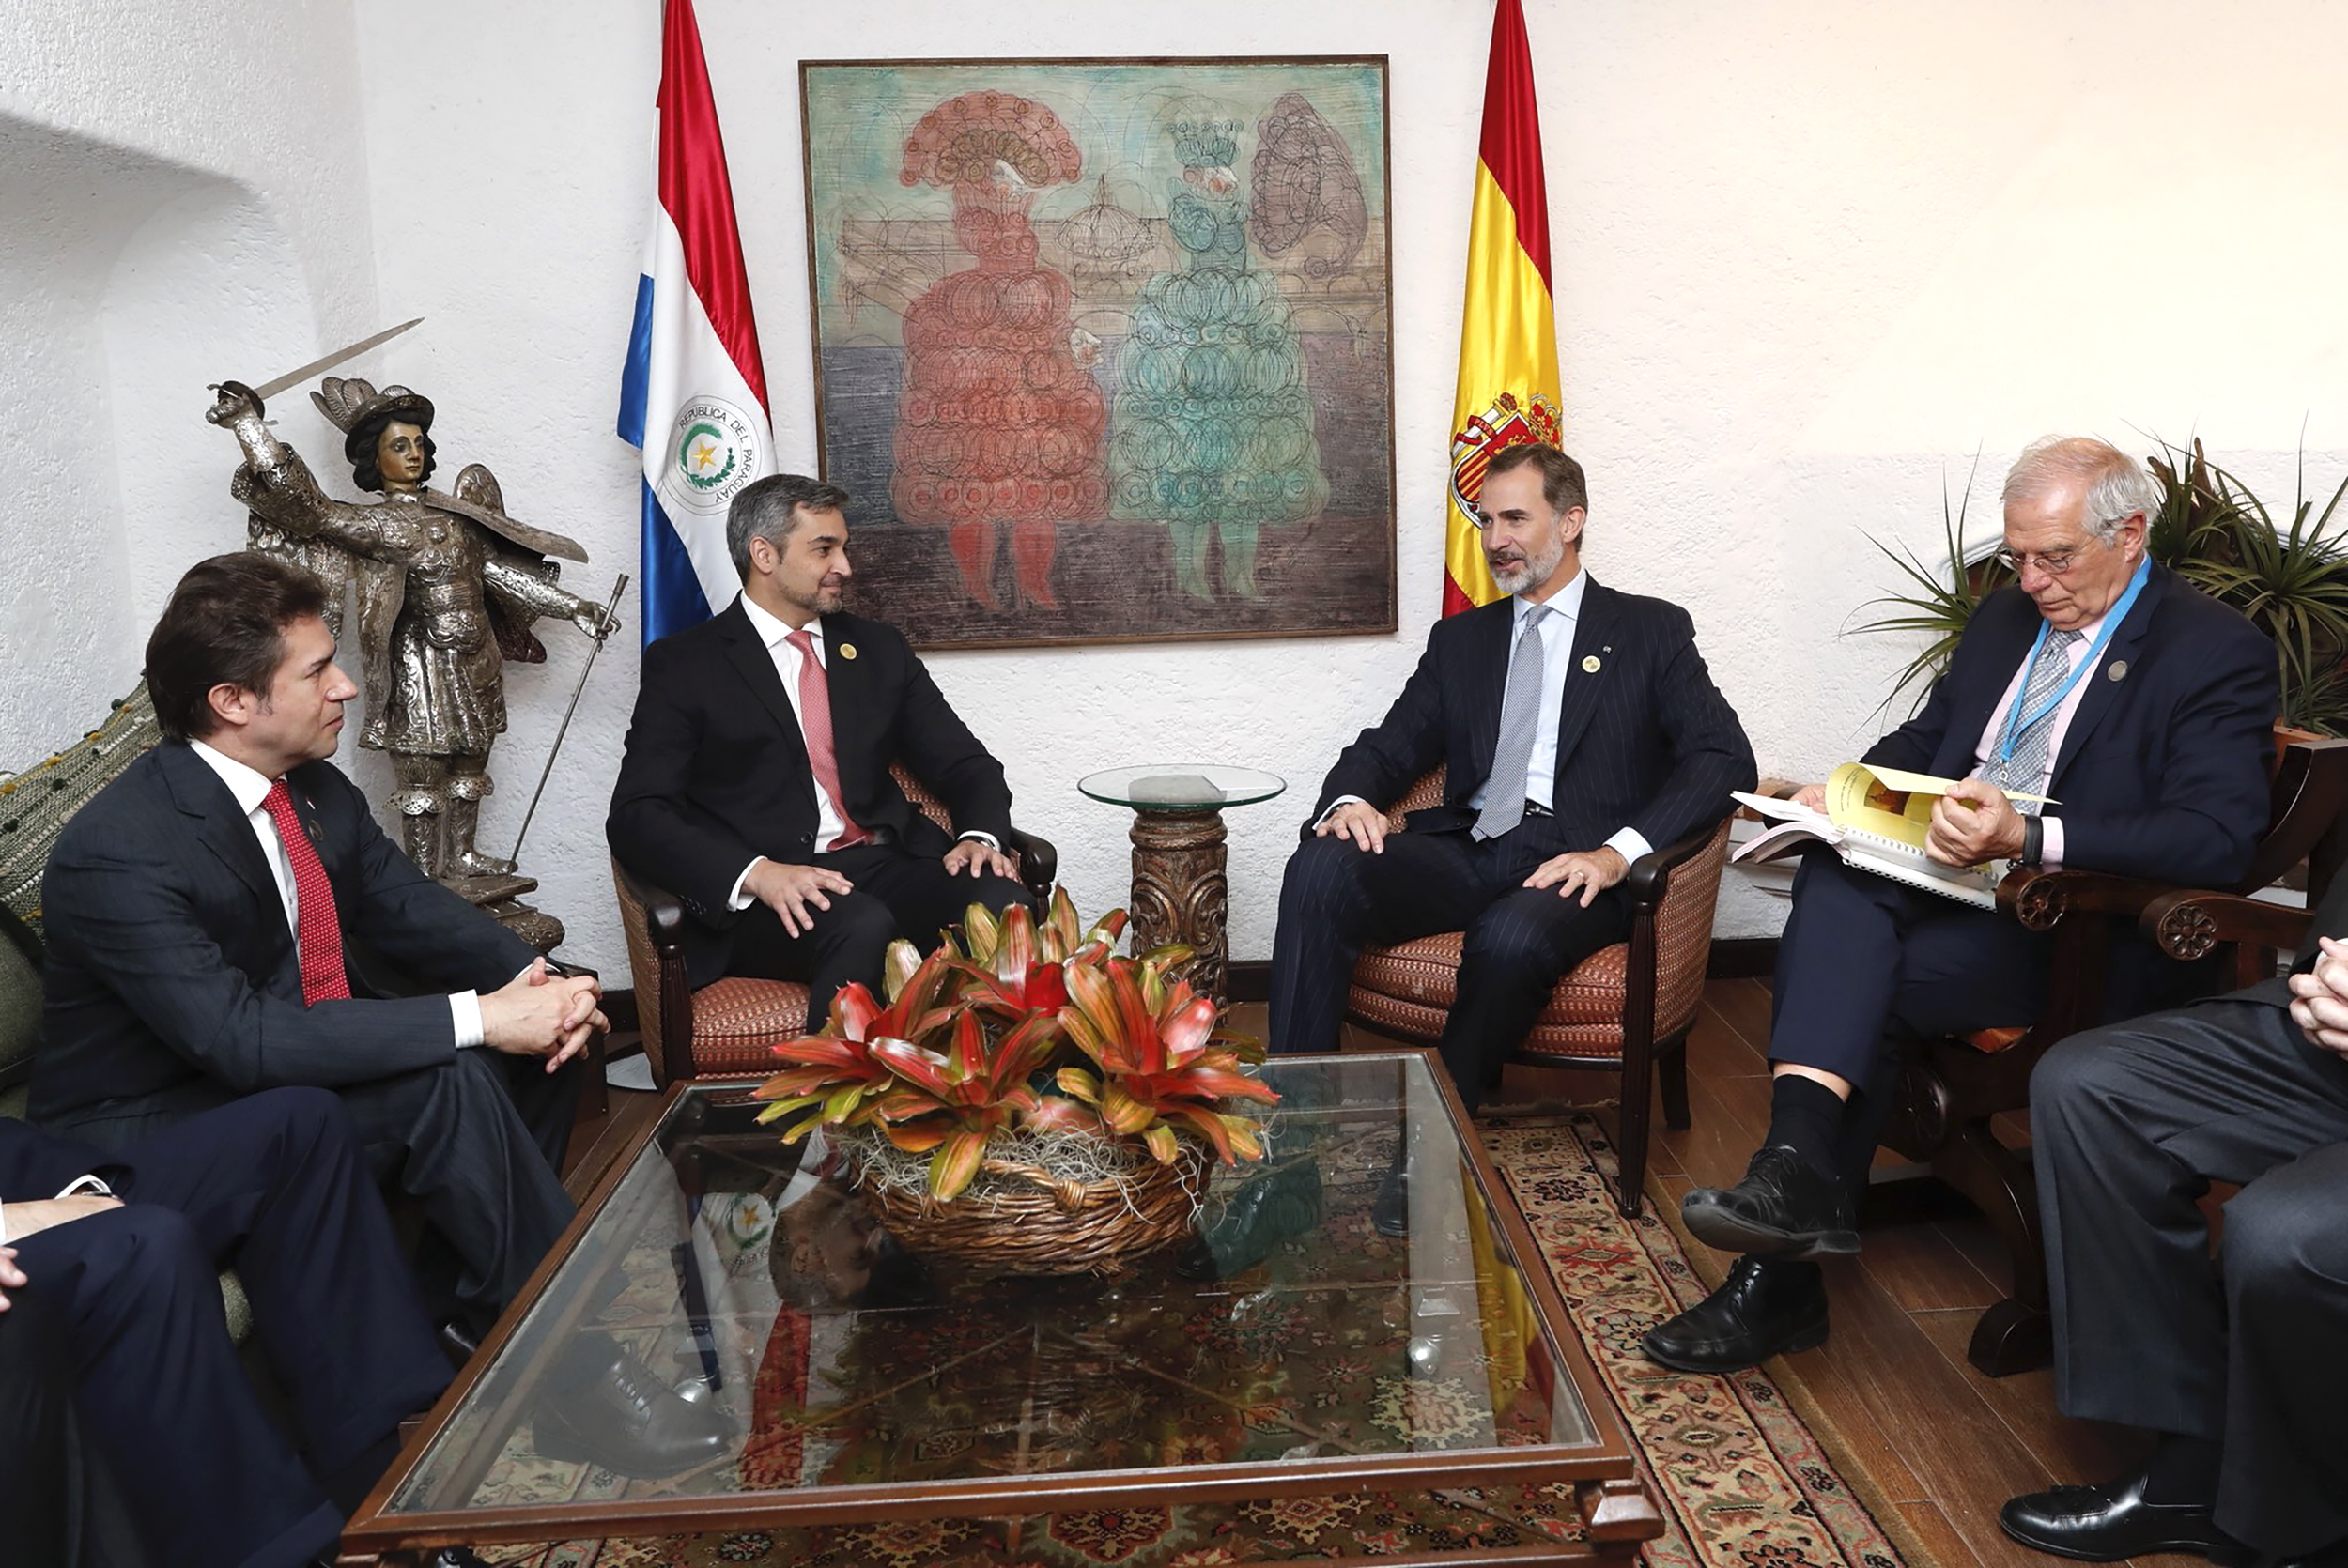 Canciller Castiglioni acompañó al Presidente Abdo Benítez en la nutrida agenda bilateral desarrollada hoy en el marco de la XXVI Cumbre Iberoamericana